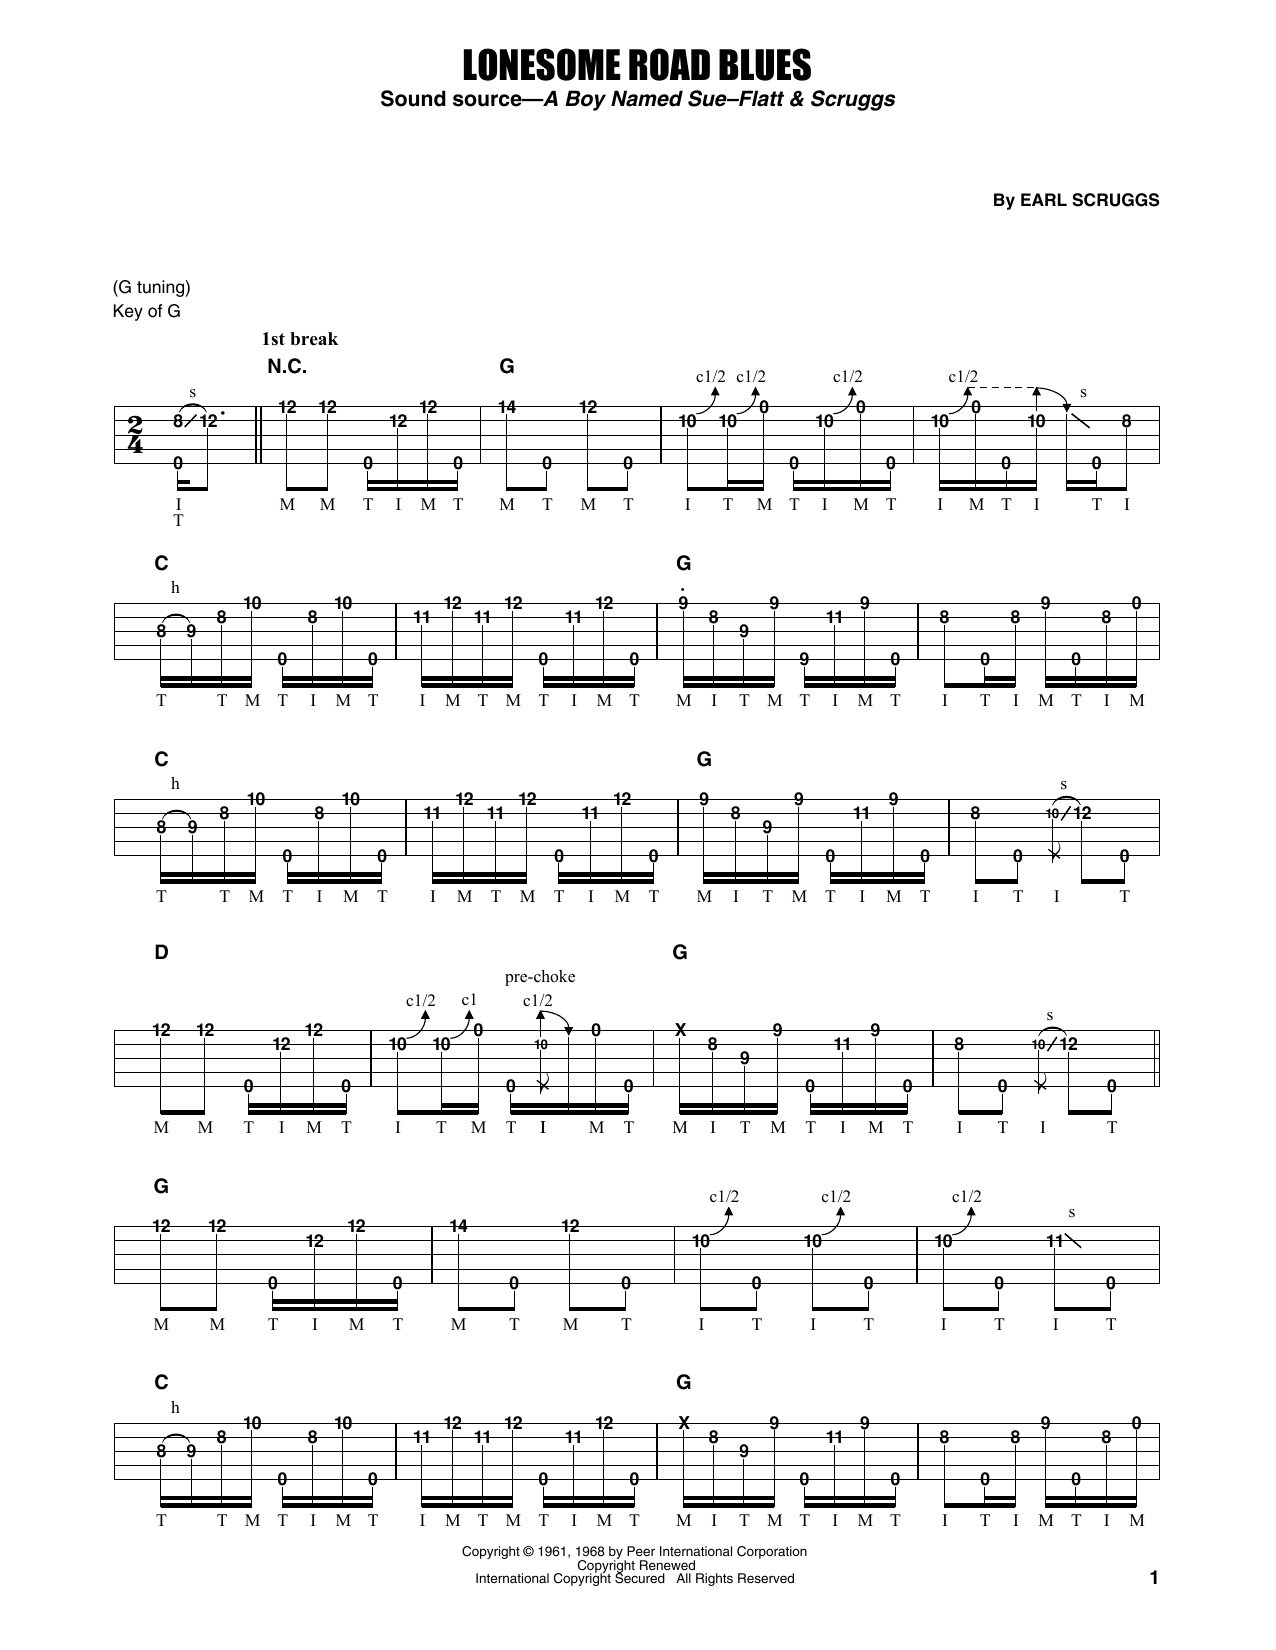 Flatt & Scruggs Lonesome Road Blues Sheet Music Notes & Chords for Banjo Tab - Download or Print PDF